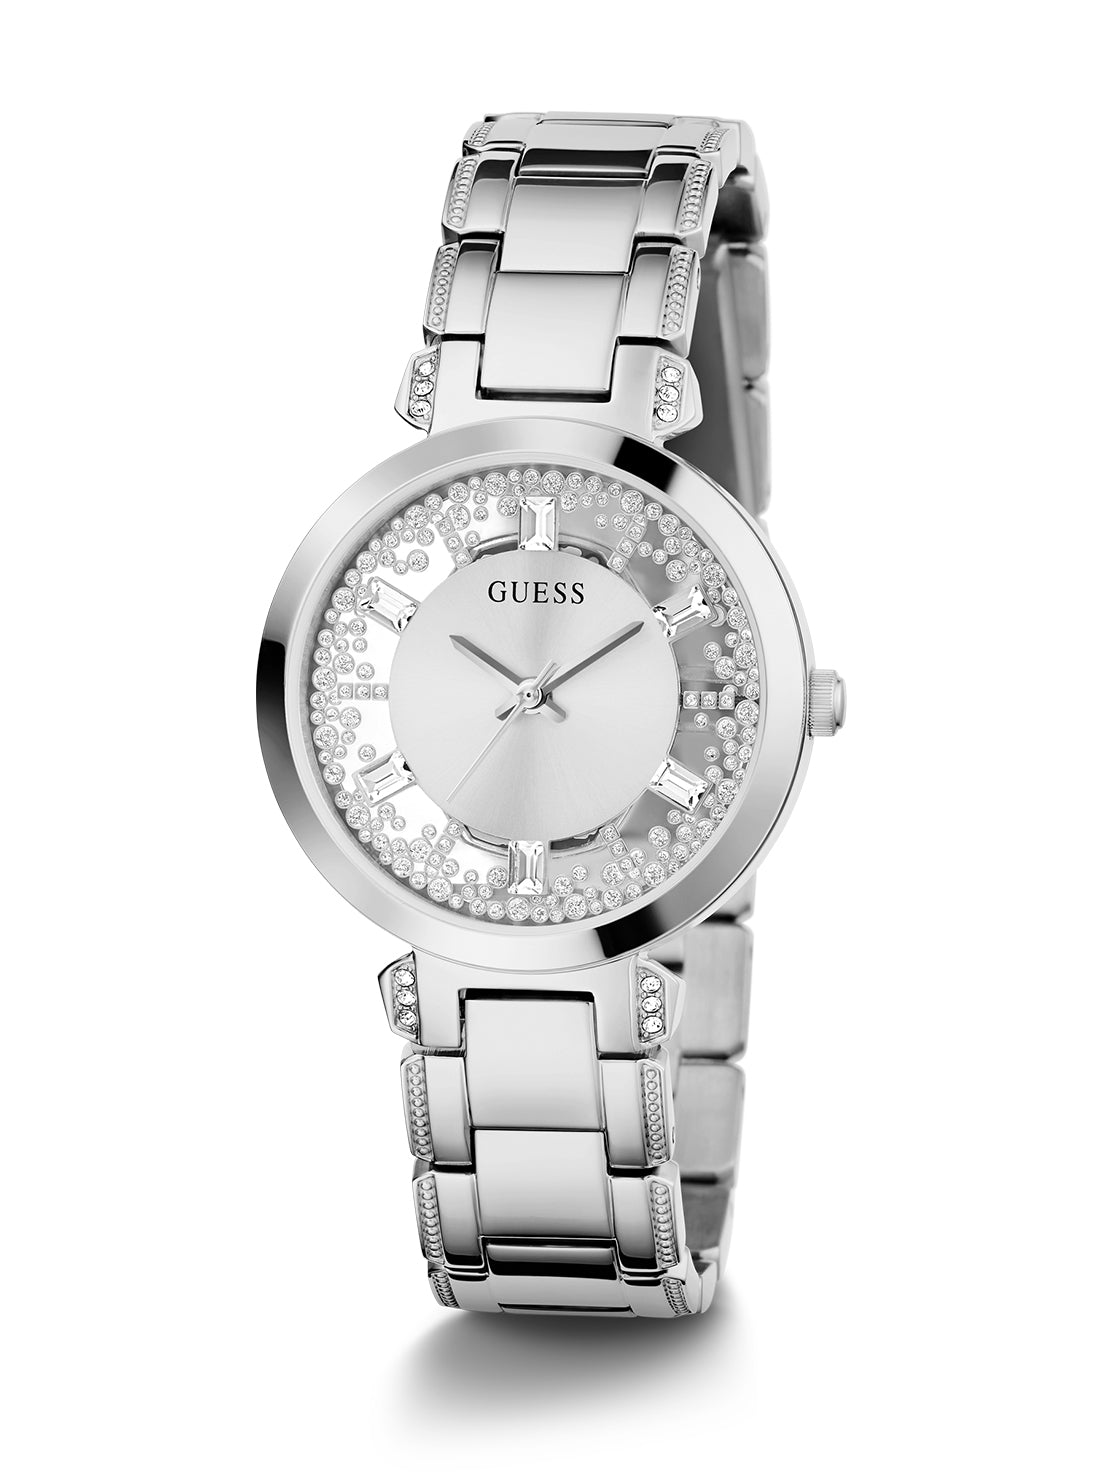 GUESS Women's Silver Crystal Clear Glitz Watch GW0470L1 Full View